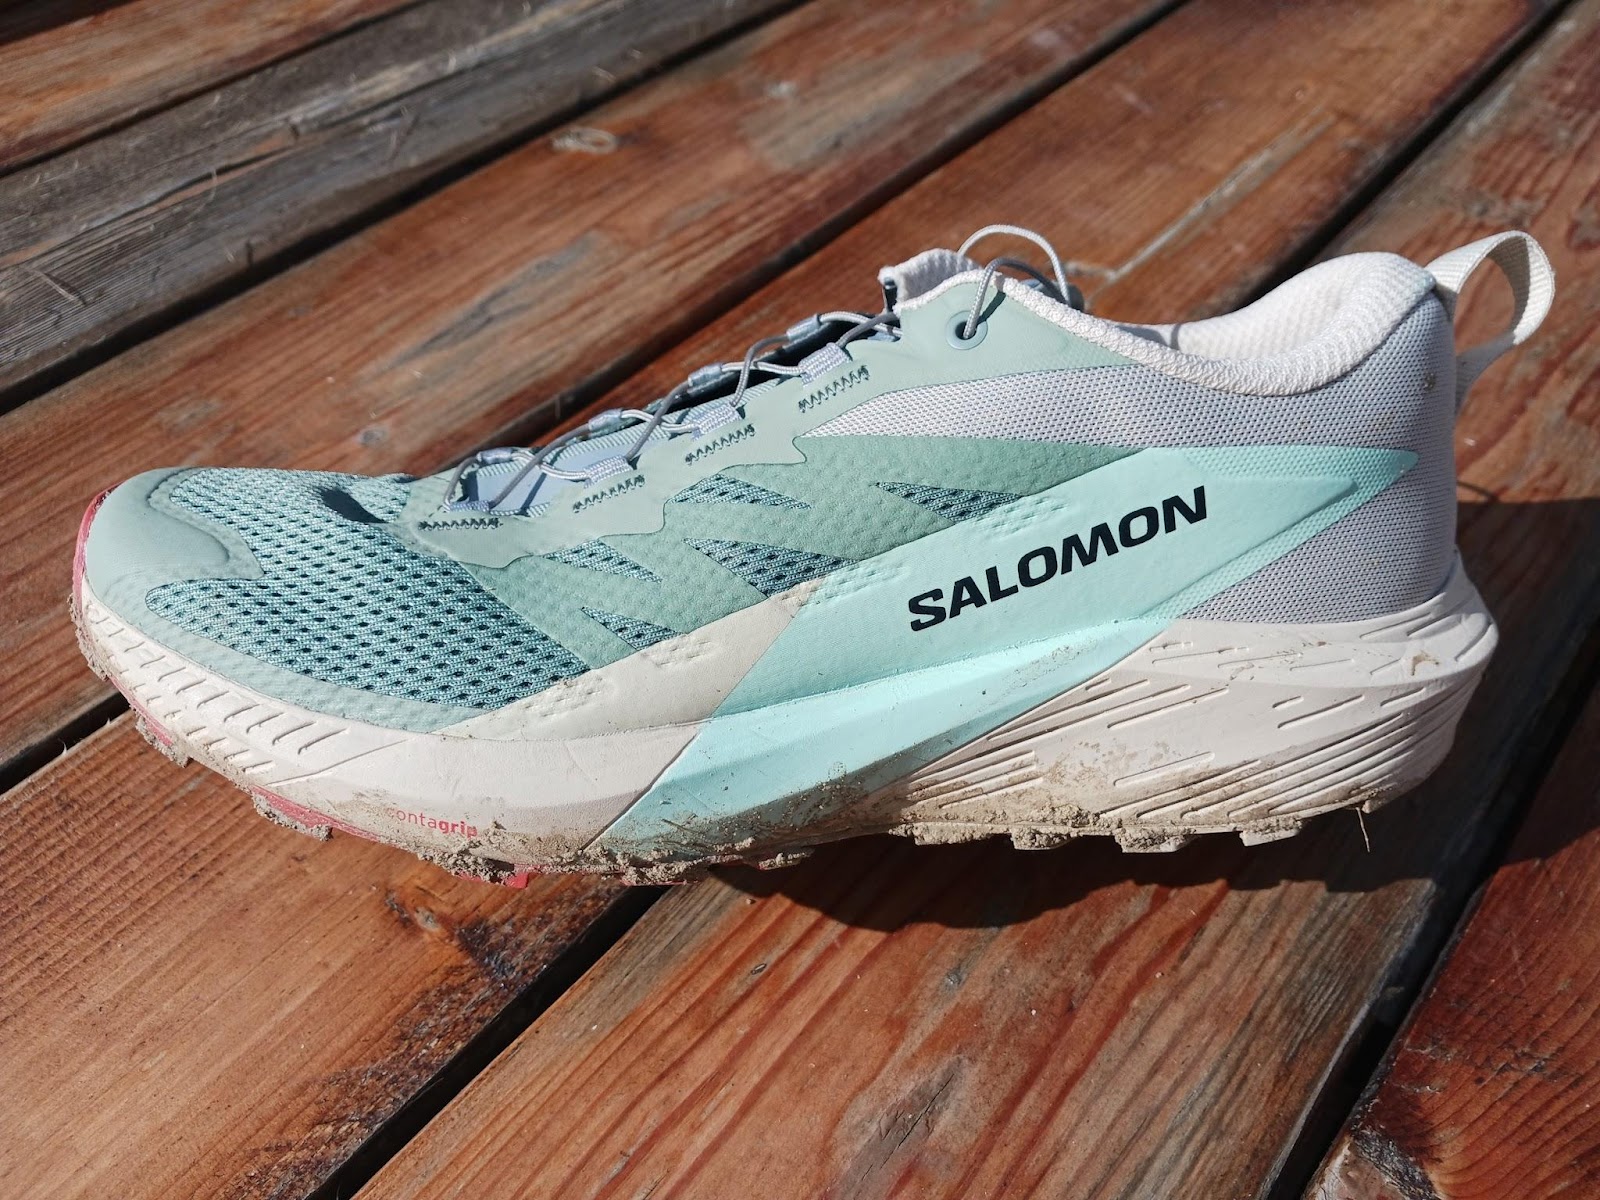 SALOMON Women's Sense Ride 5 Trail Running Shoes - Eastern